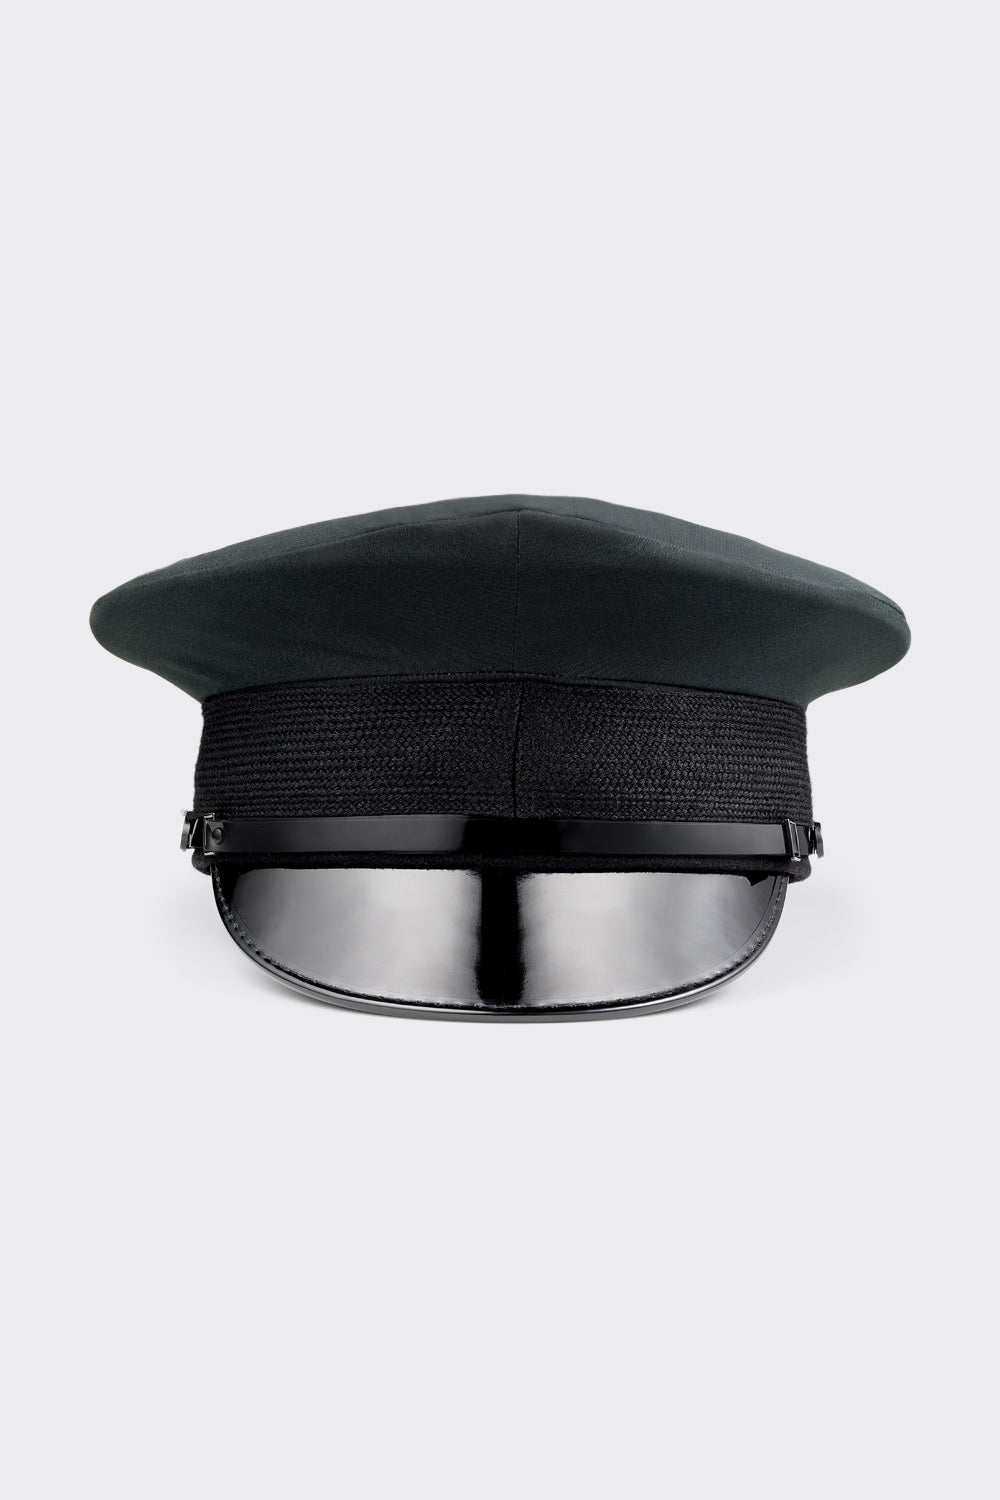 Black Cotton Cap Cover - For Royal Navy Caps